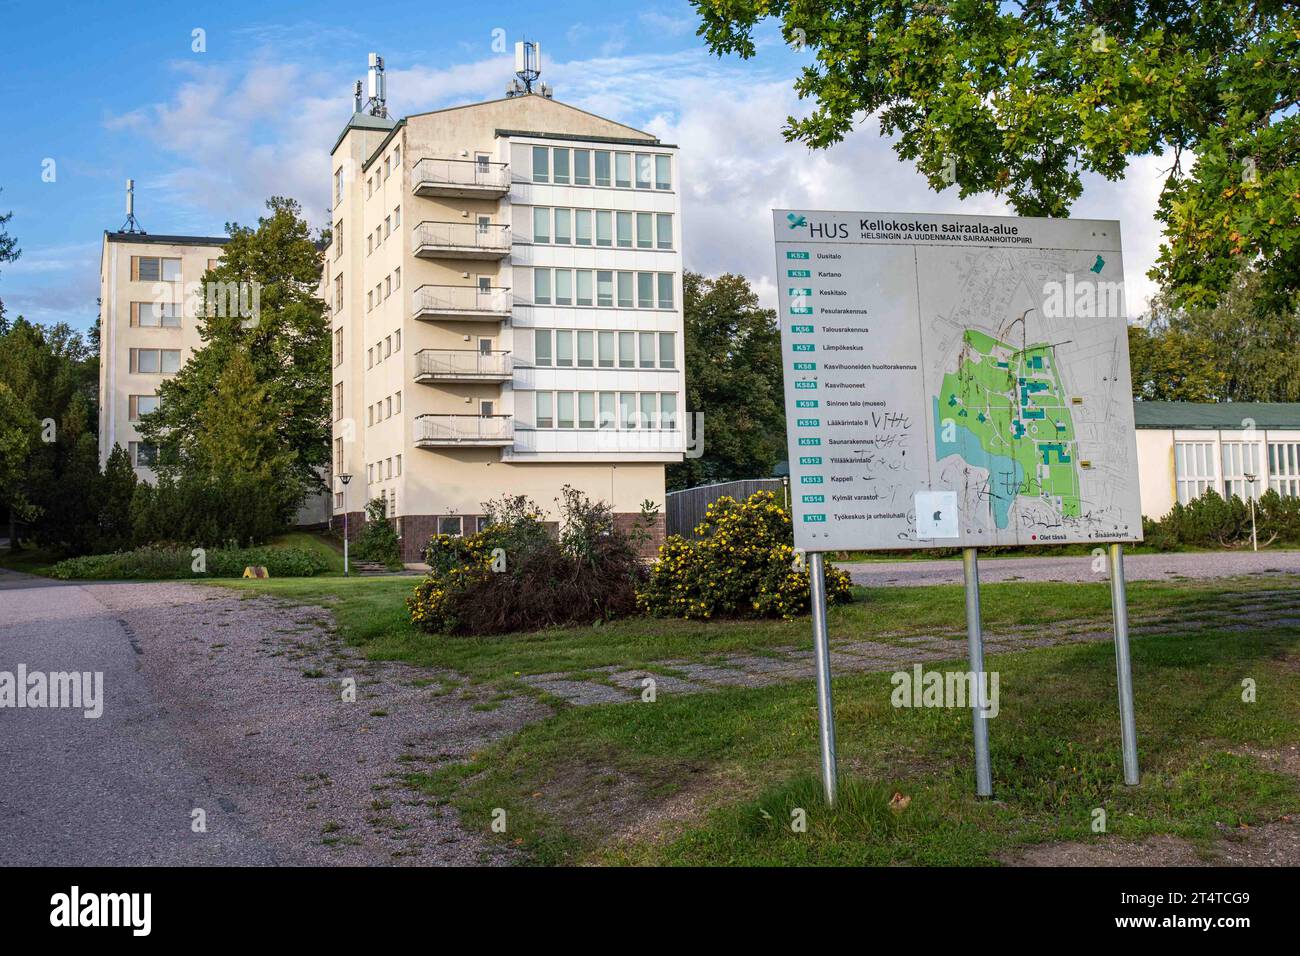 Kellokosken sairaala-alue sign and former mental hospital buildings in Kellokoski district of Tuusula, Finland Stock Photo